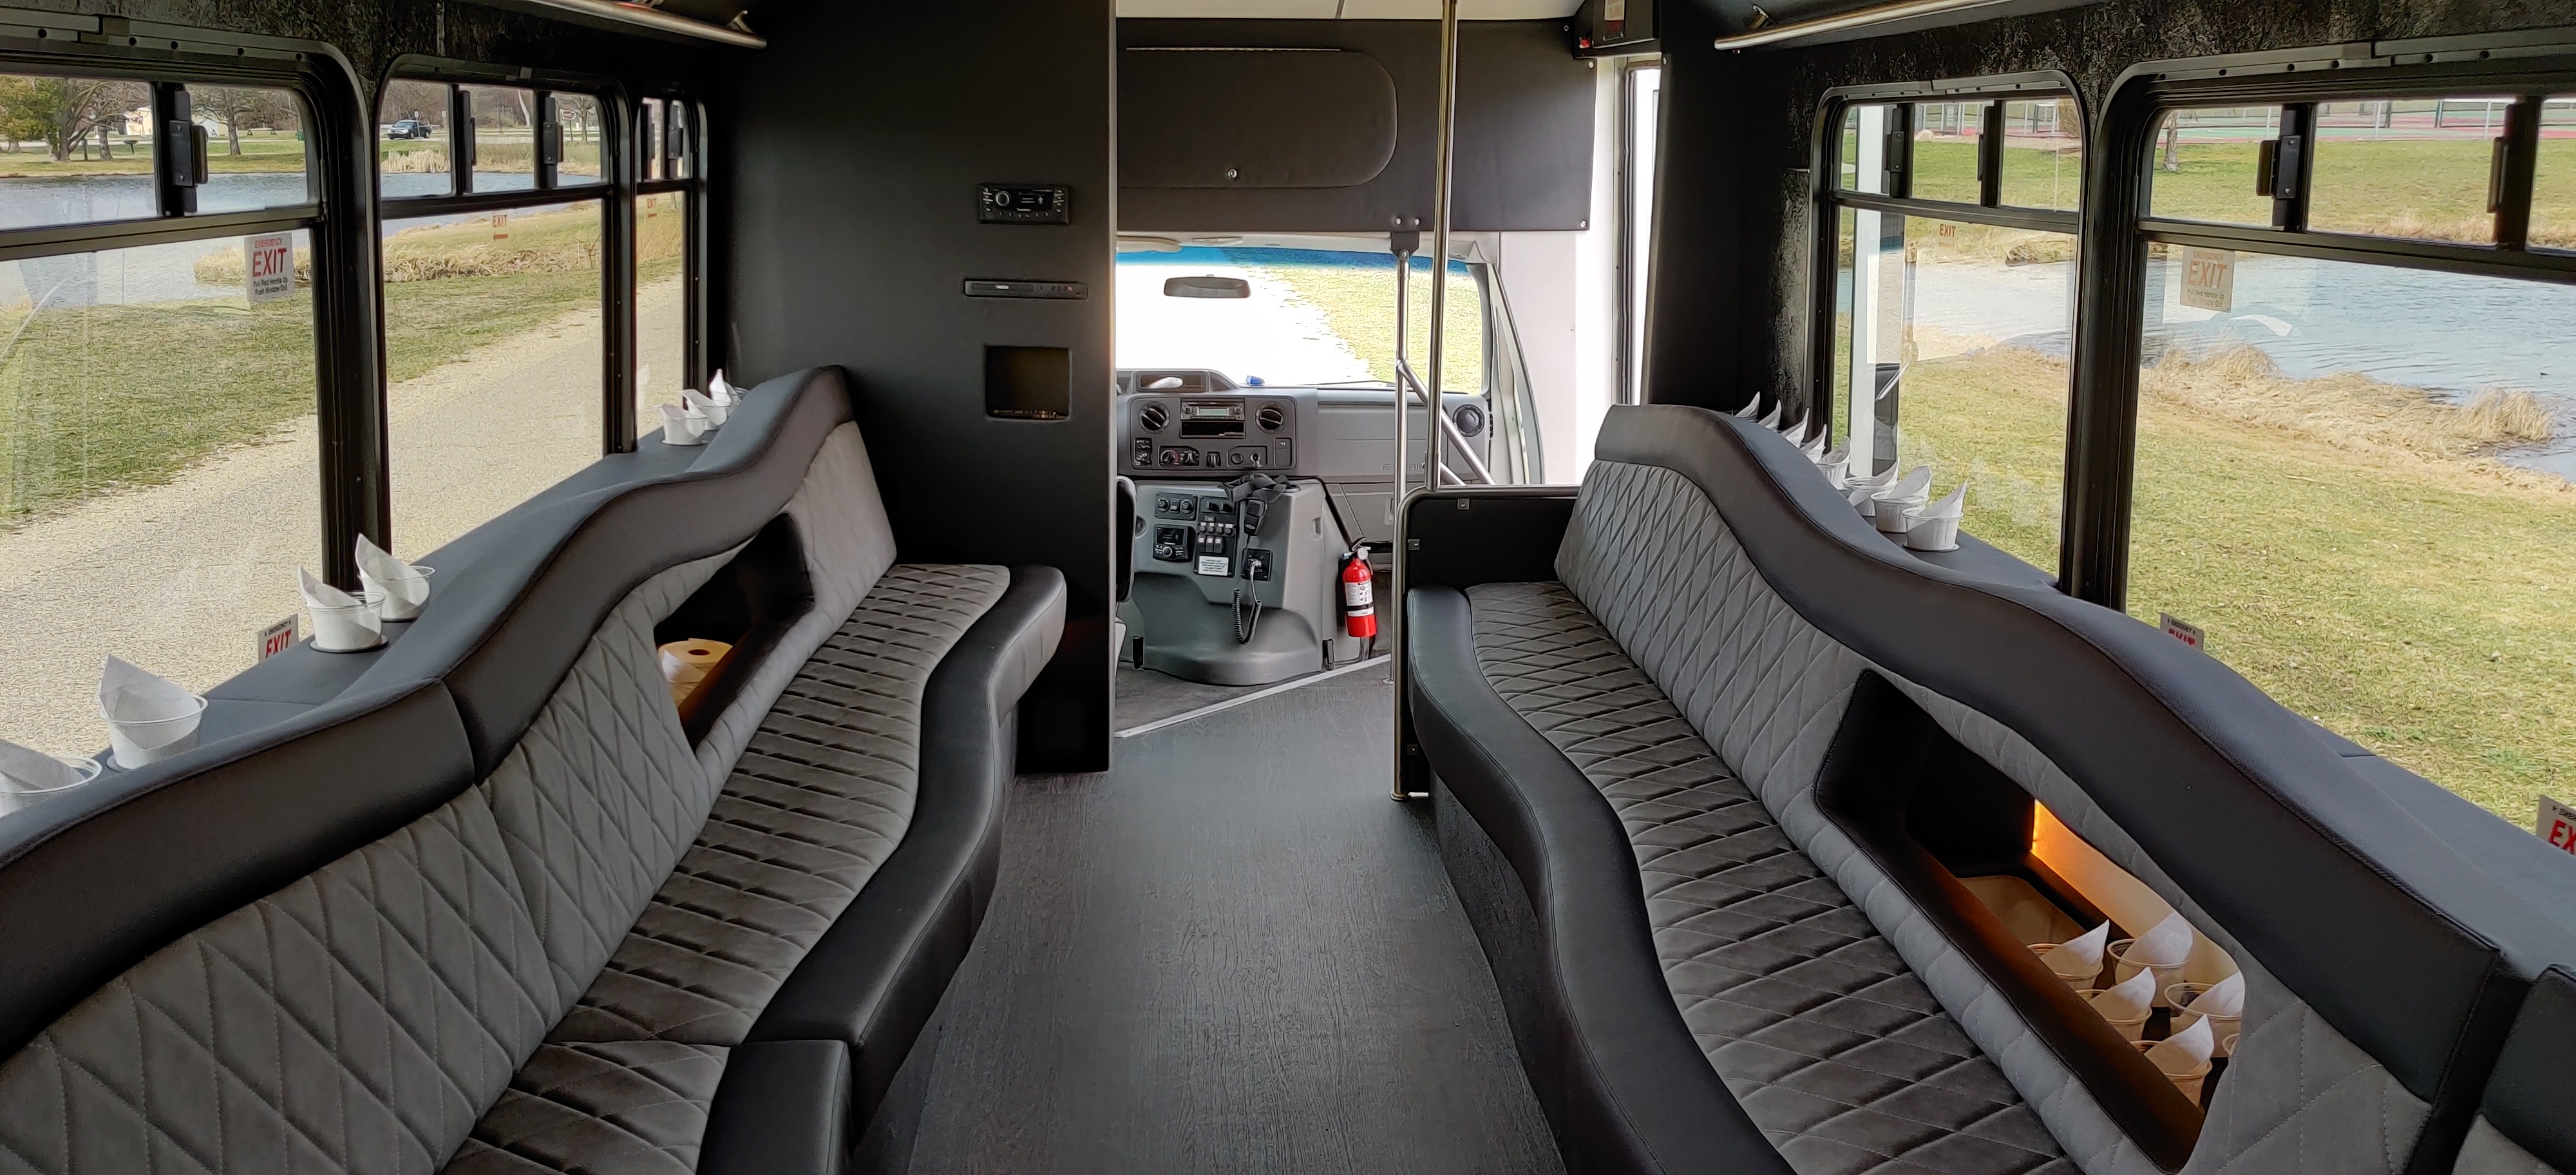 21 Passenger Luxury Limo Bus Interior 4